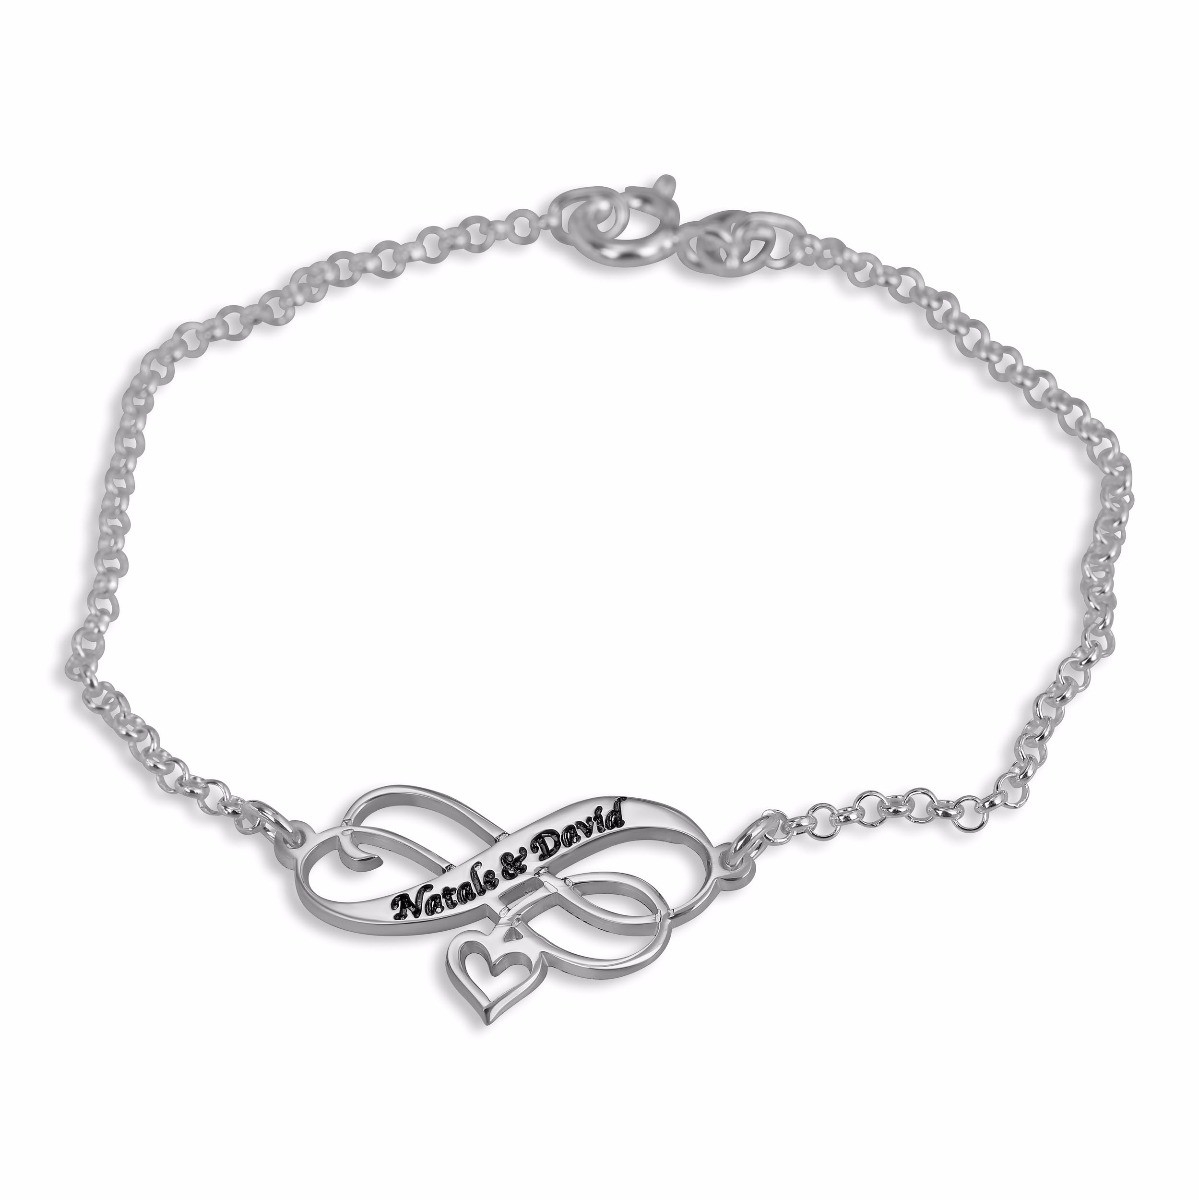 Personalized Couple Bracelets, Custom Engraved Name Bracelets With  Adjustable String, Child Bracelet, Kids Jewelry, Matching Set of 2, Love -  Etsy | Couple bracelets, Name bracelet, Kids jewelry